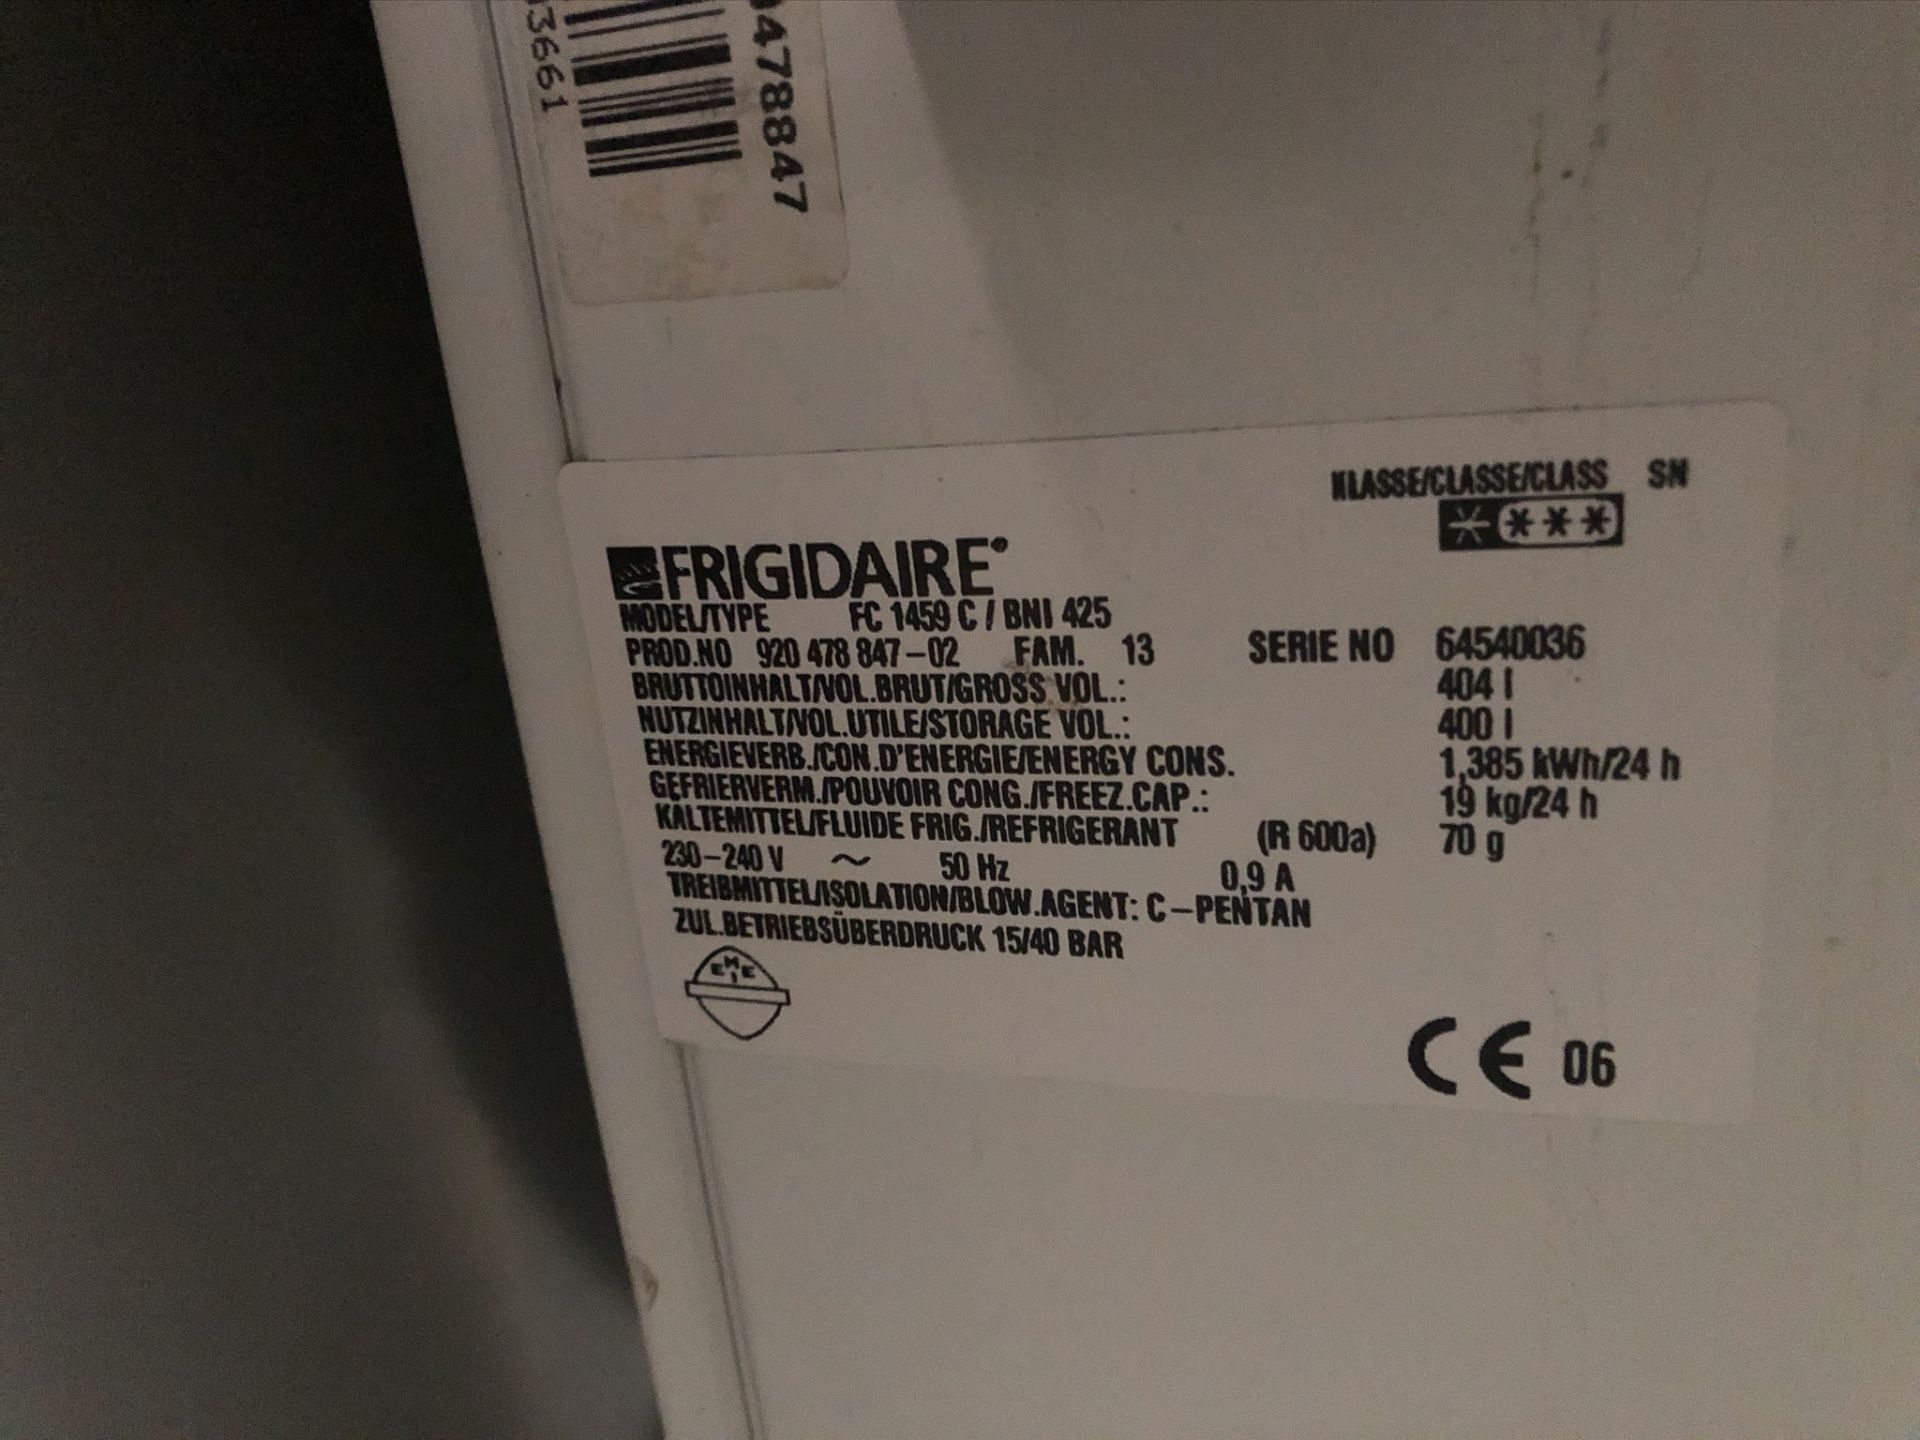 Frigidaire FC404C/BNi425 Chest Freezer - Image 4 of 4